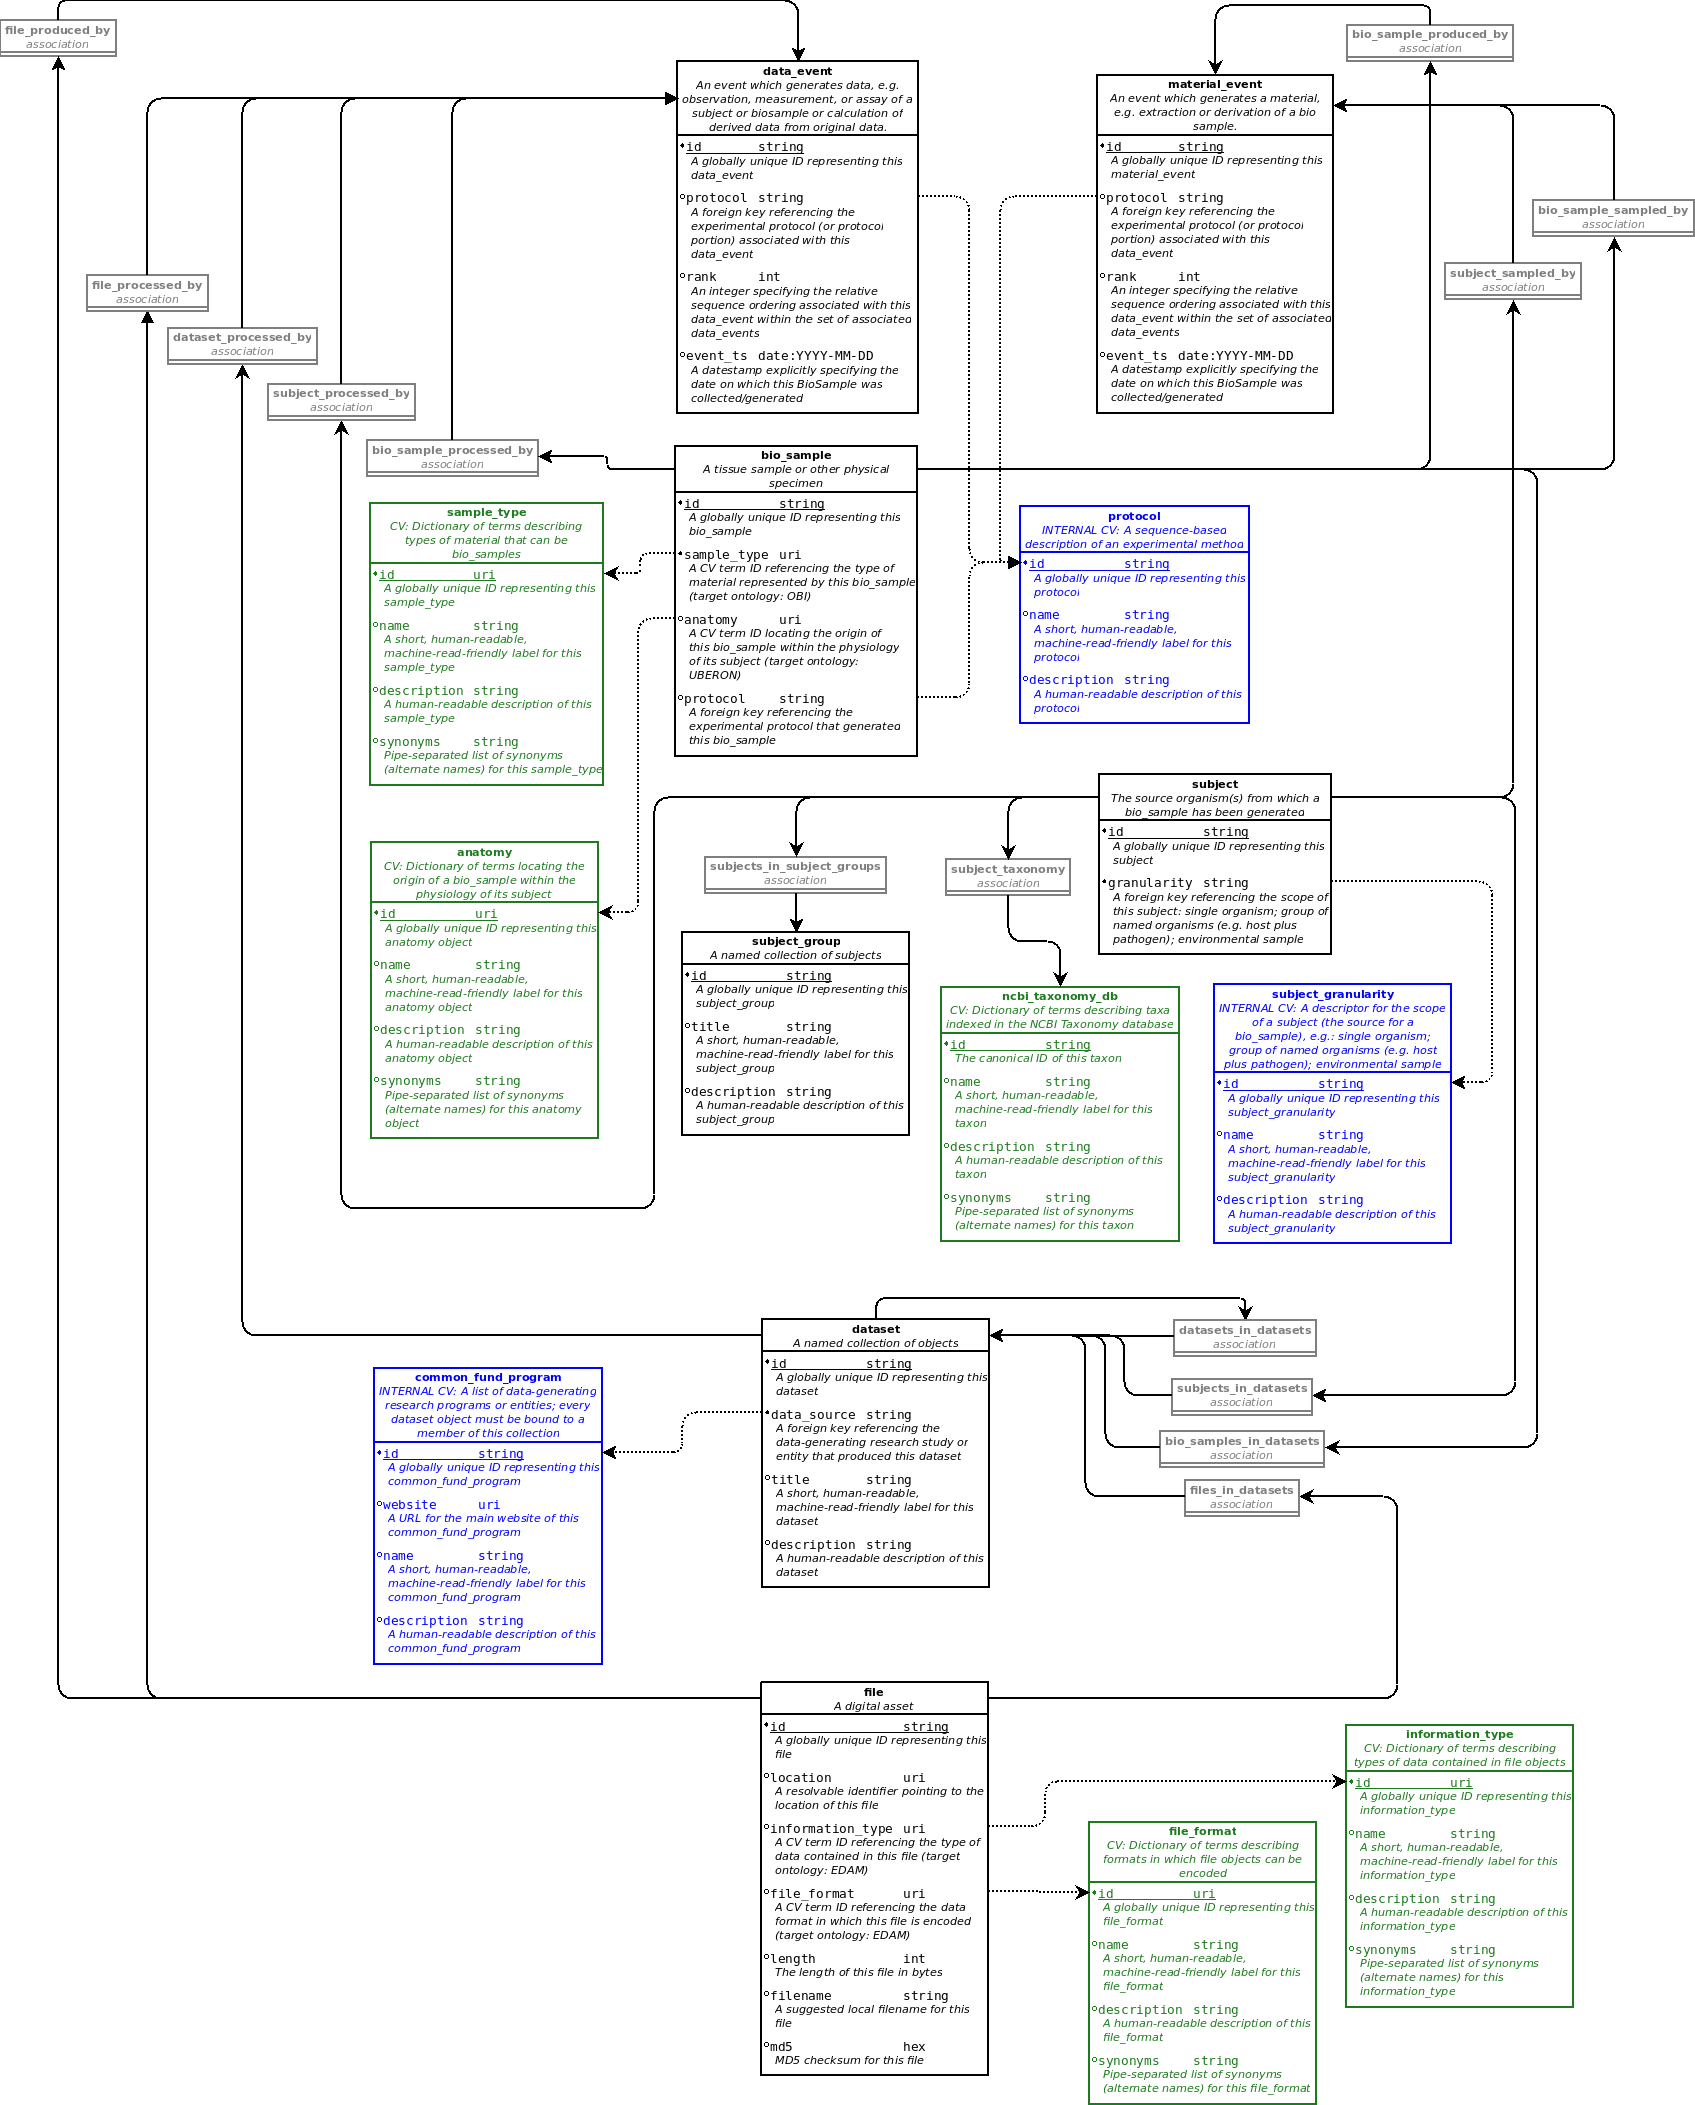 Full model diagram